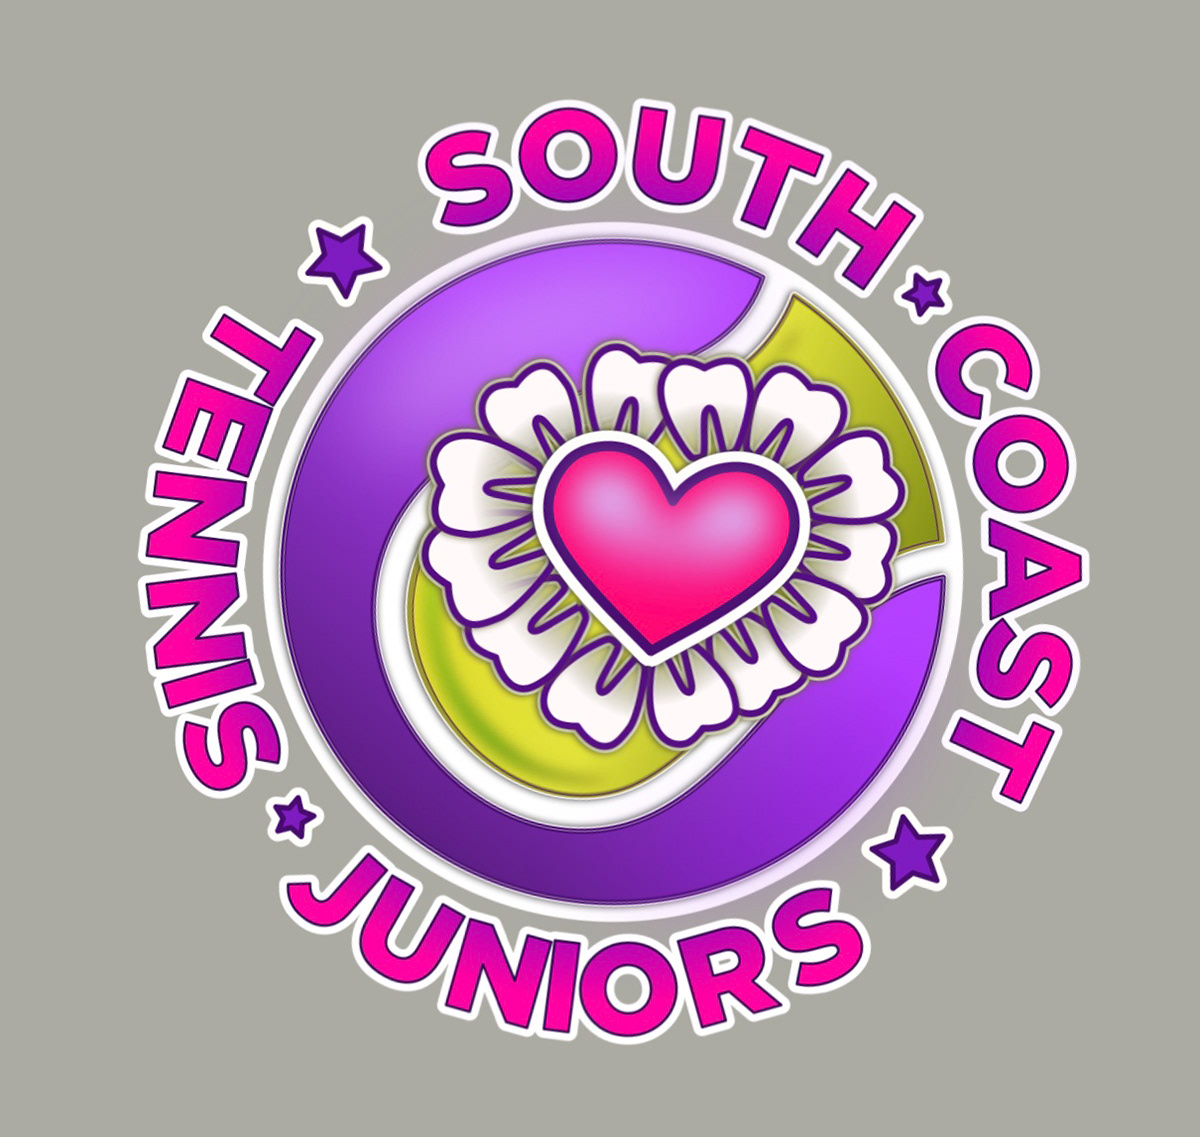 logo south coast